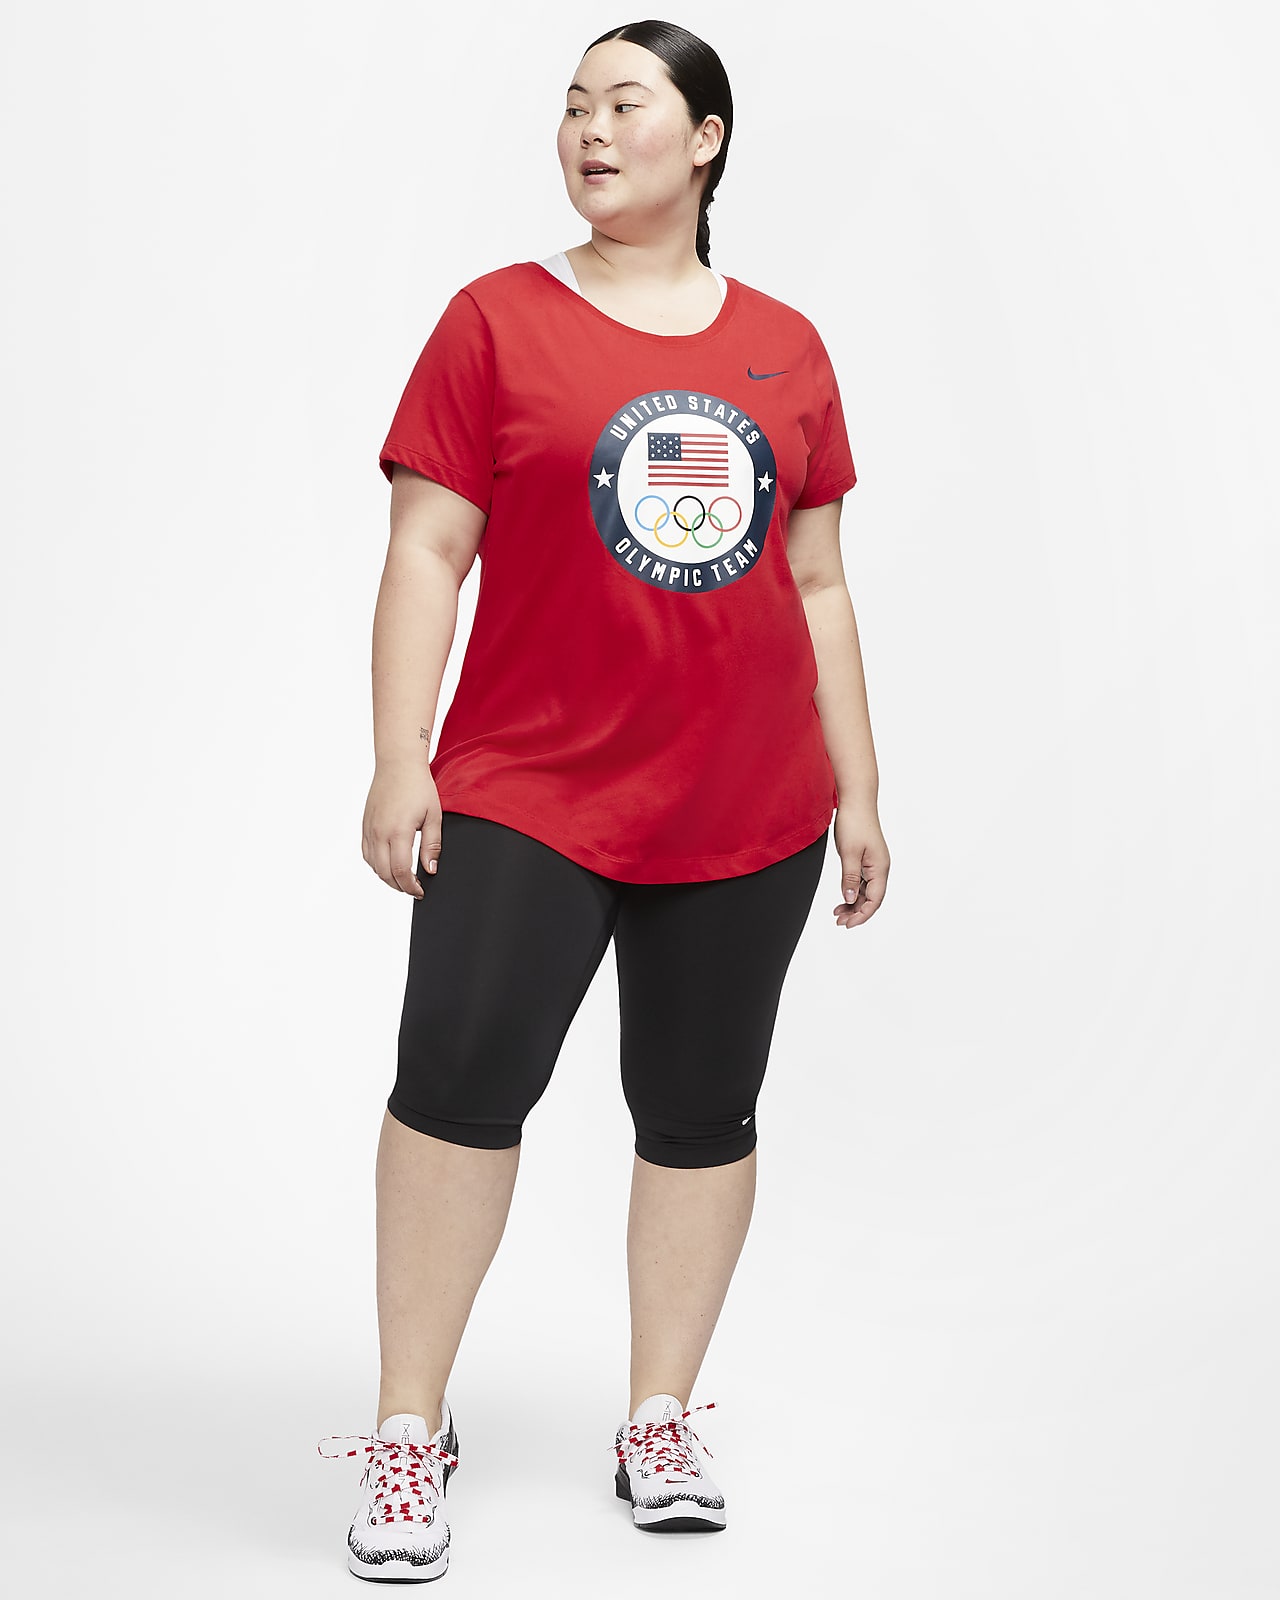 Team USA Women's T-Shirt (Plus Size).